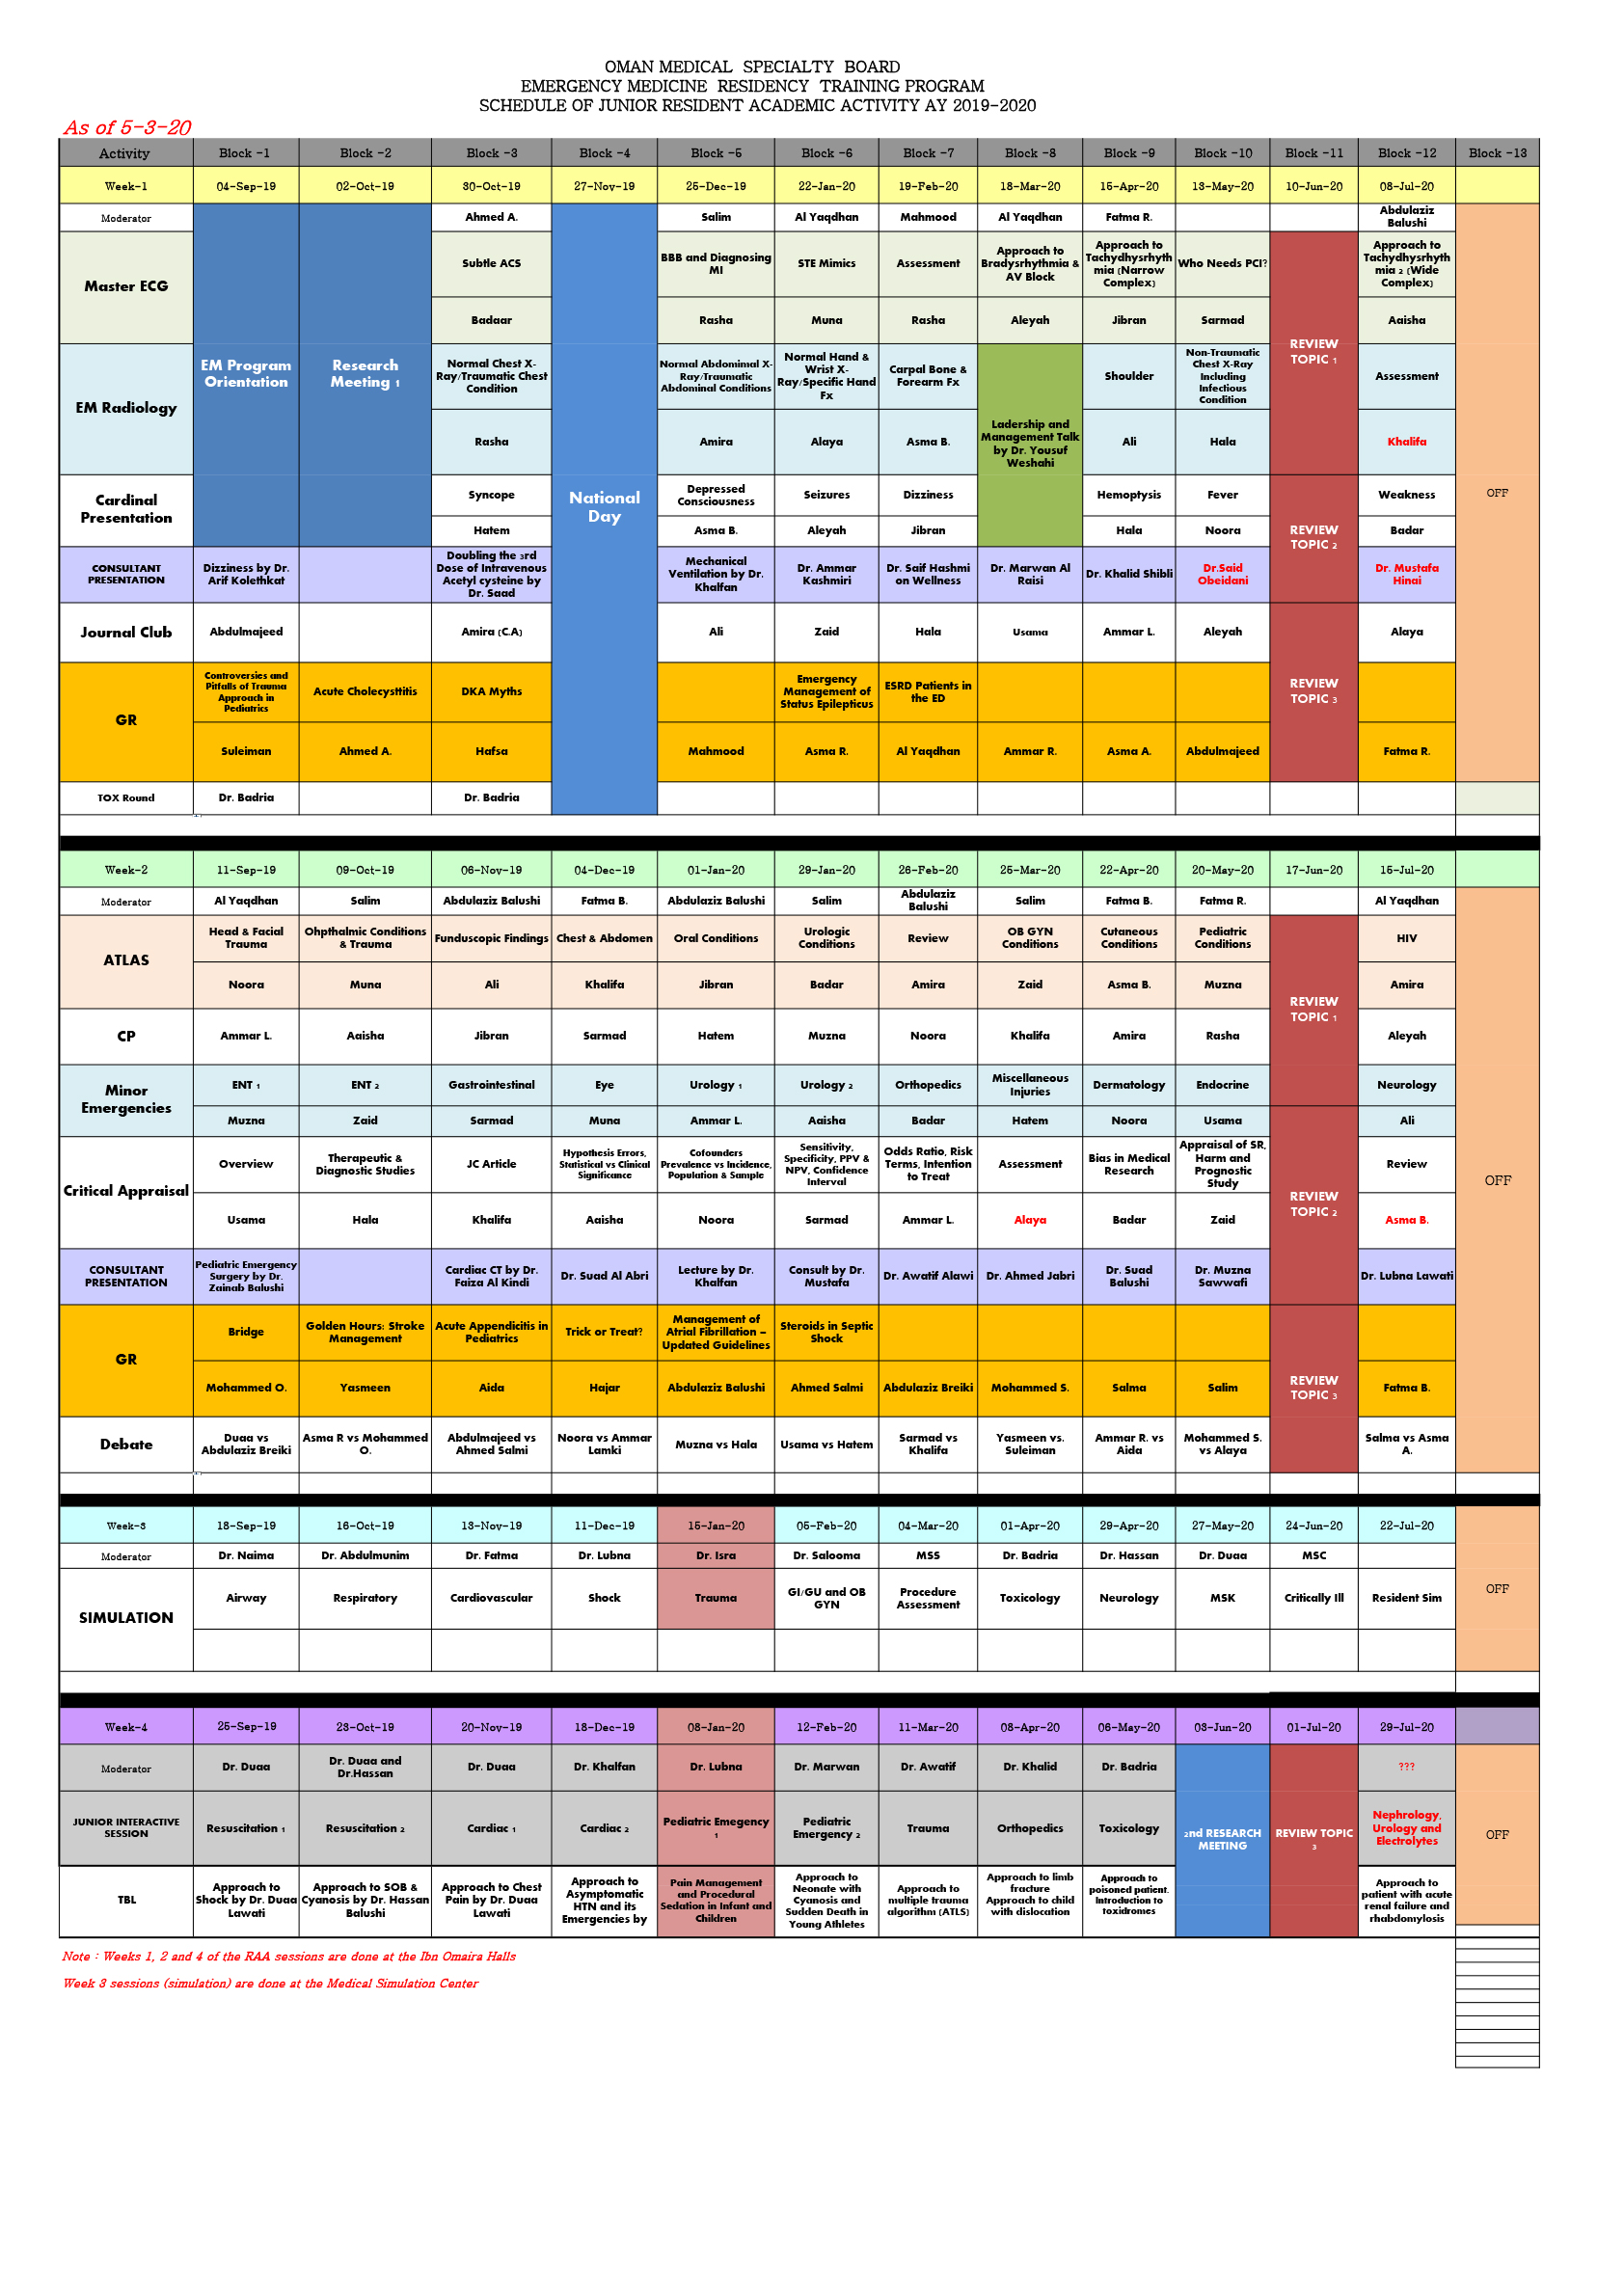 EM Resident Academic Activity Schedules